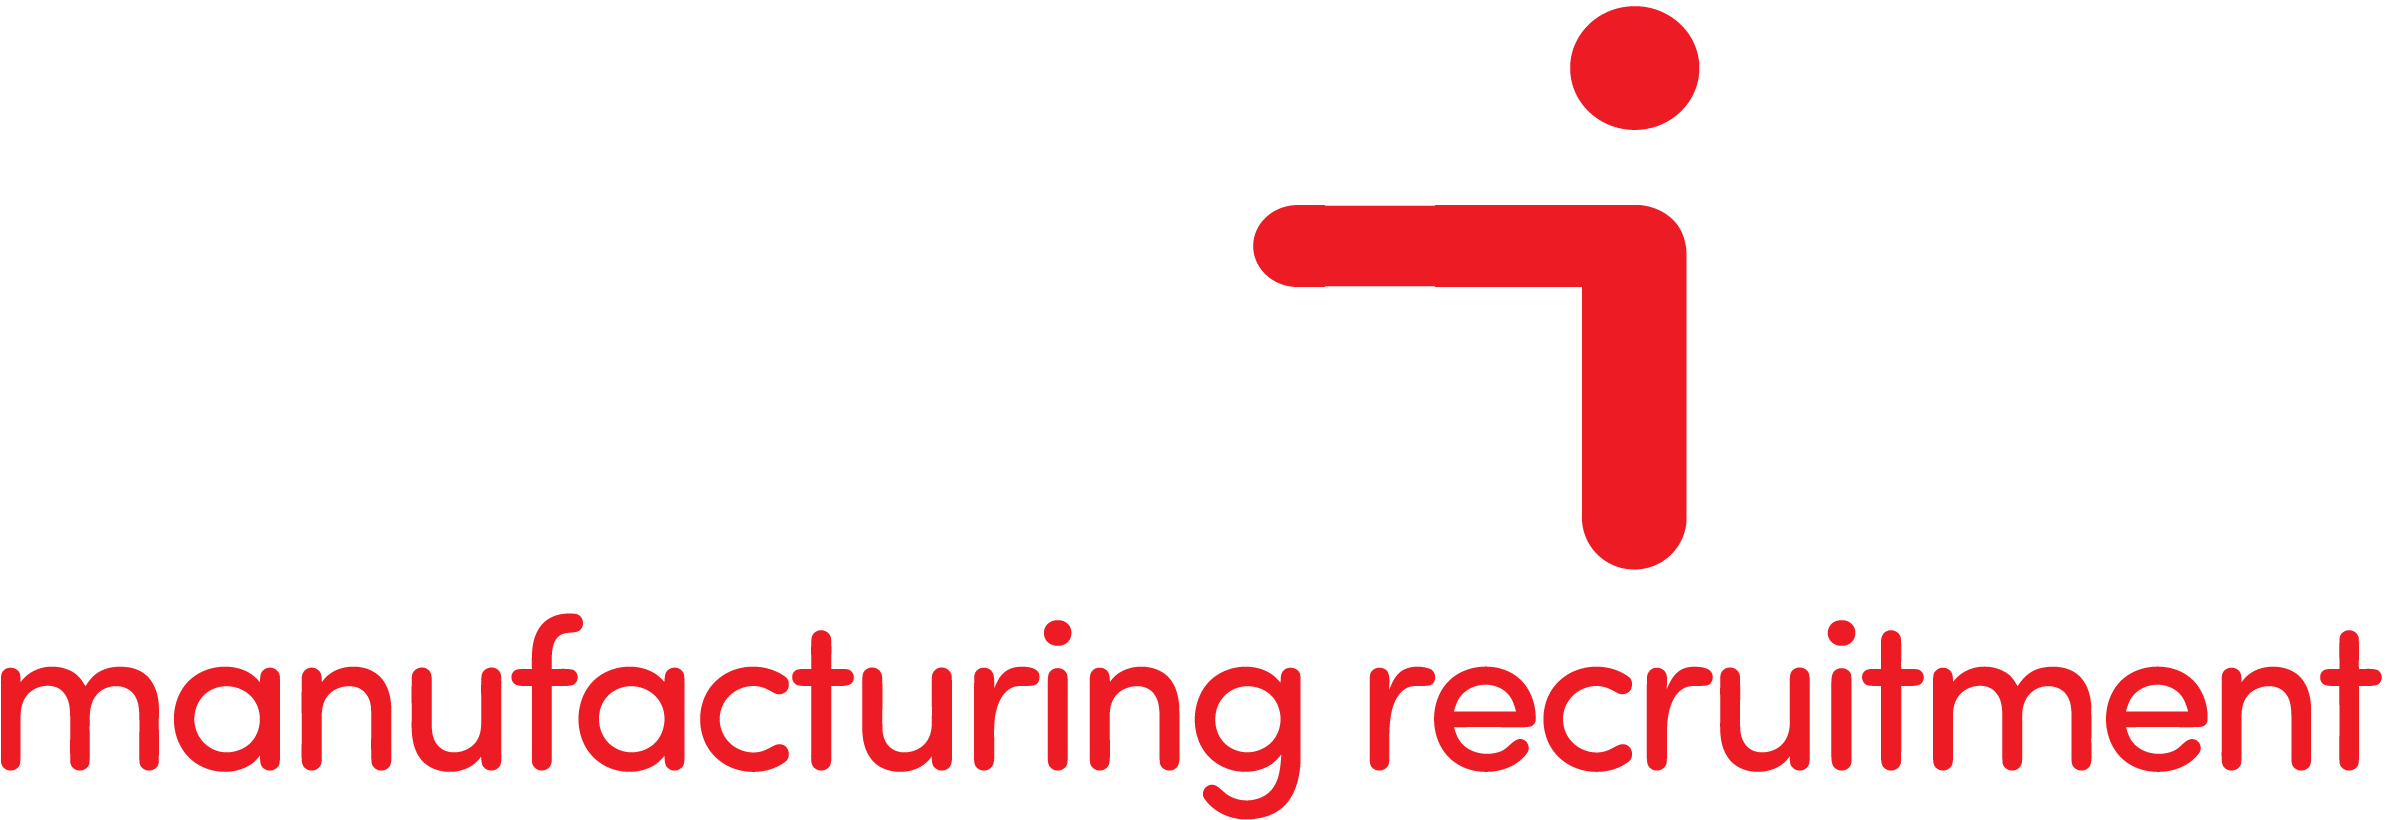 bonefire logo red